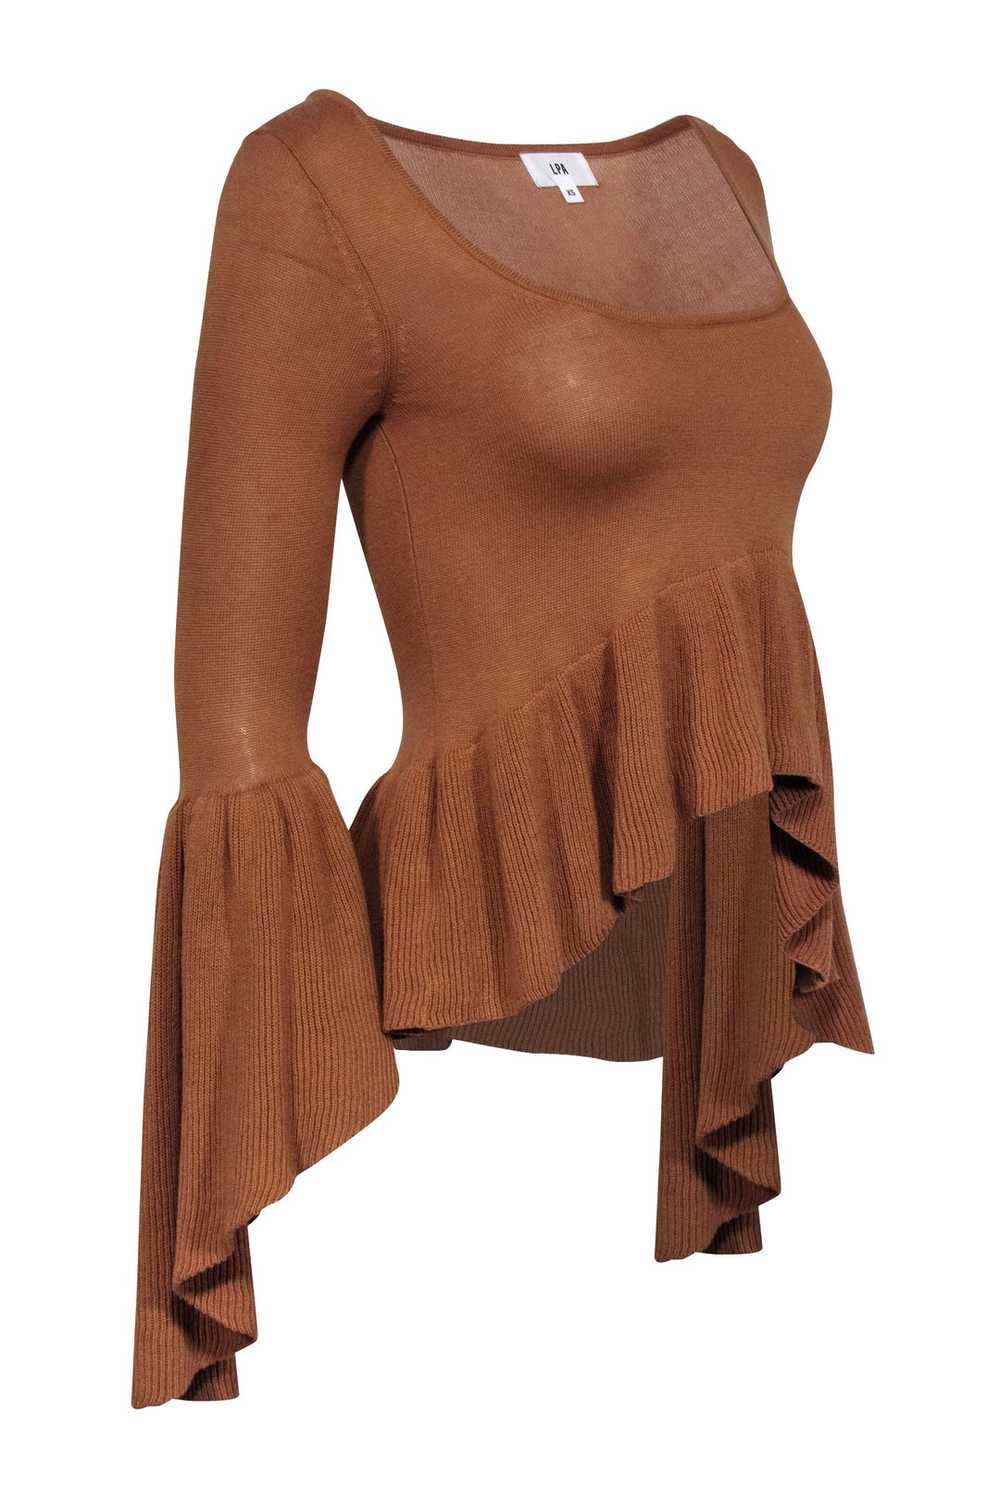 LPA - Tan Scoop Neck Long Sleeve Sweater w/ Bell … - image 2